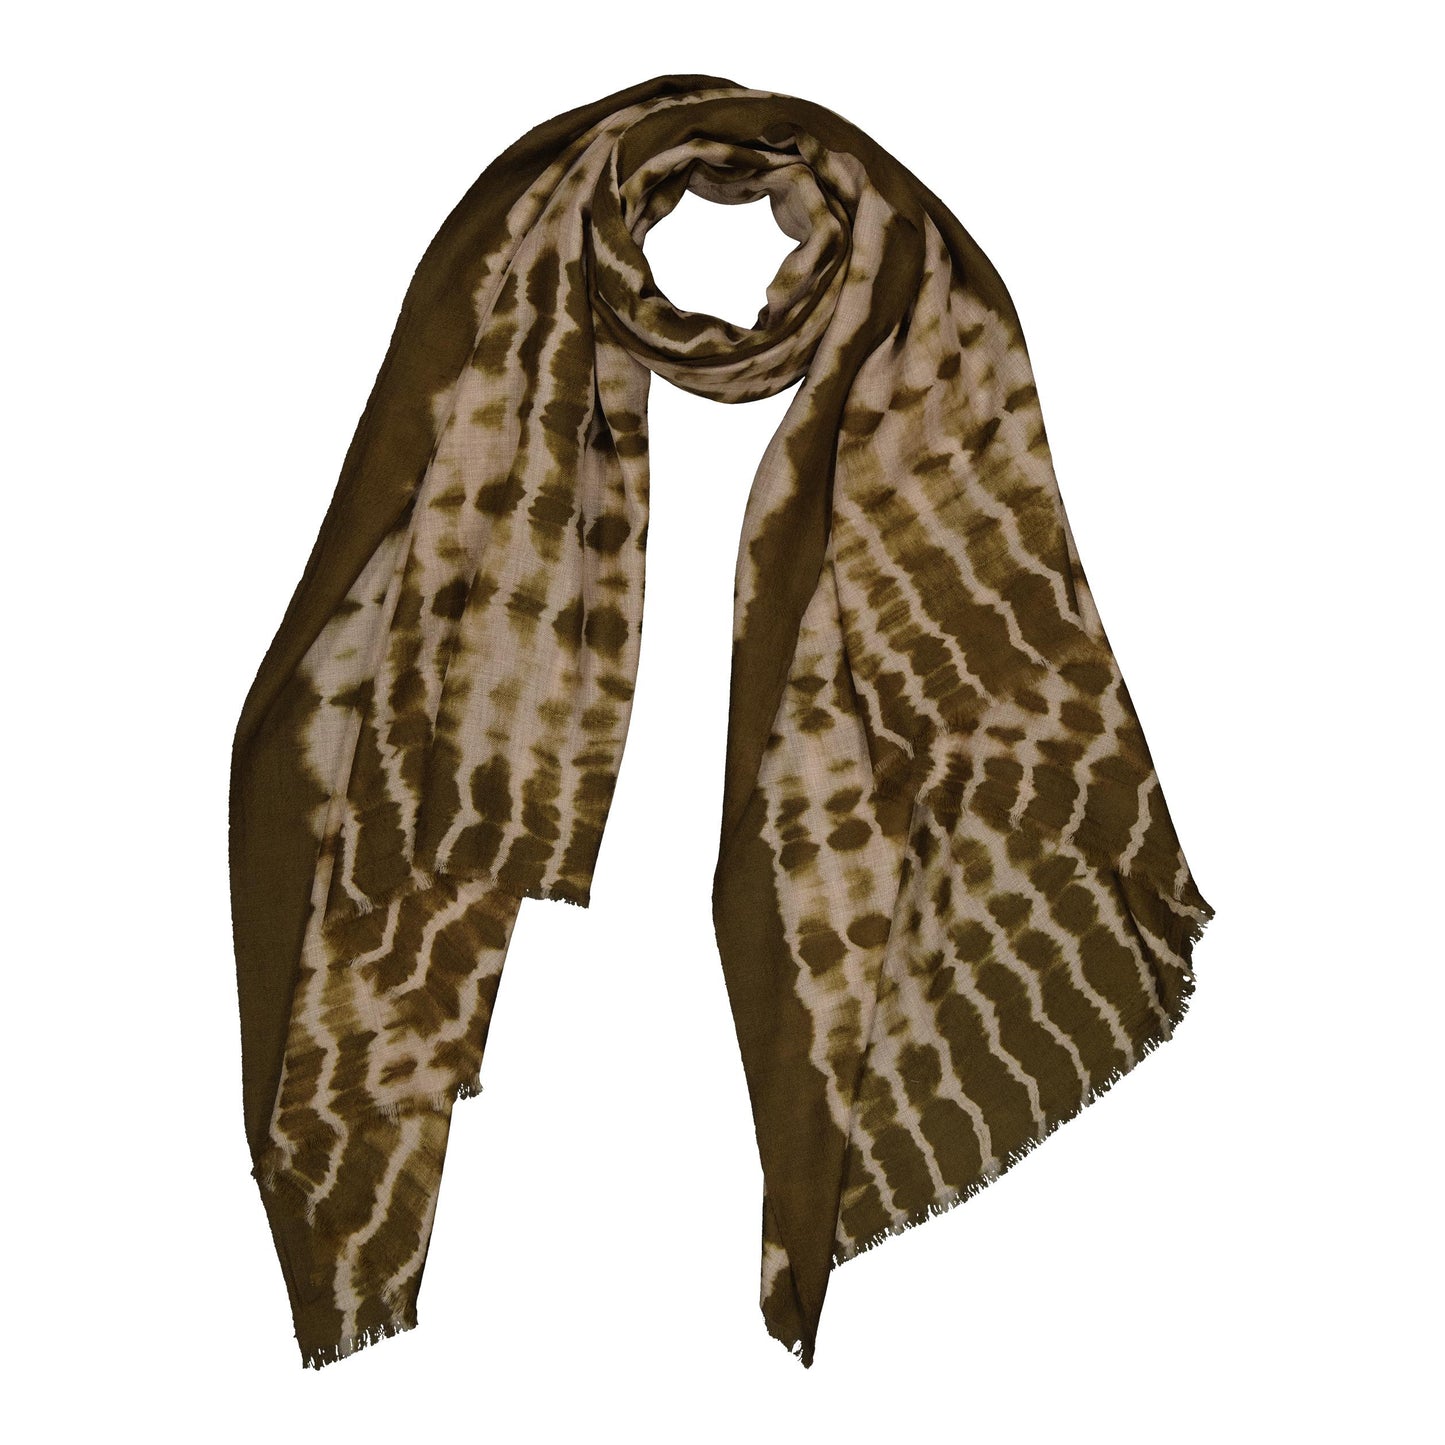 RIVE - shibori cashmere shawl BROWN